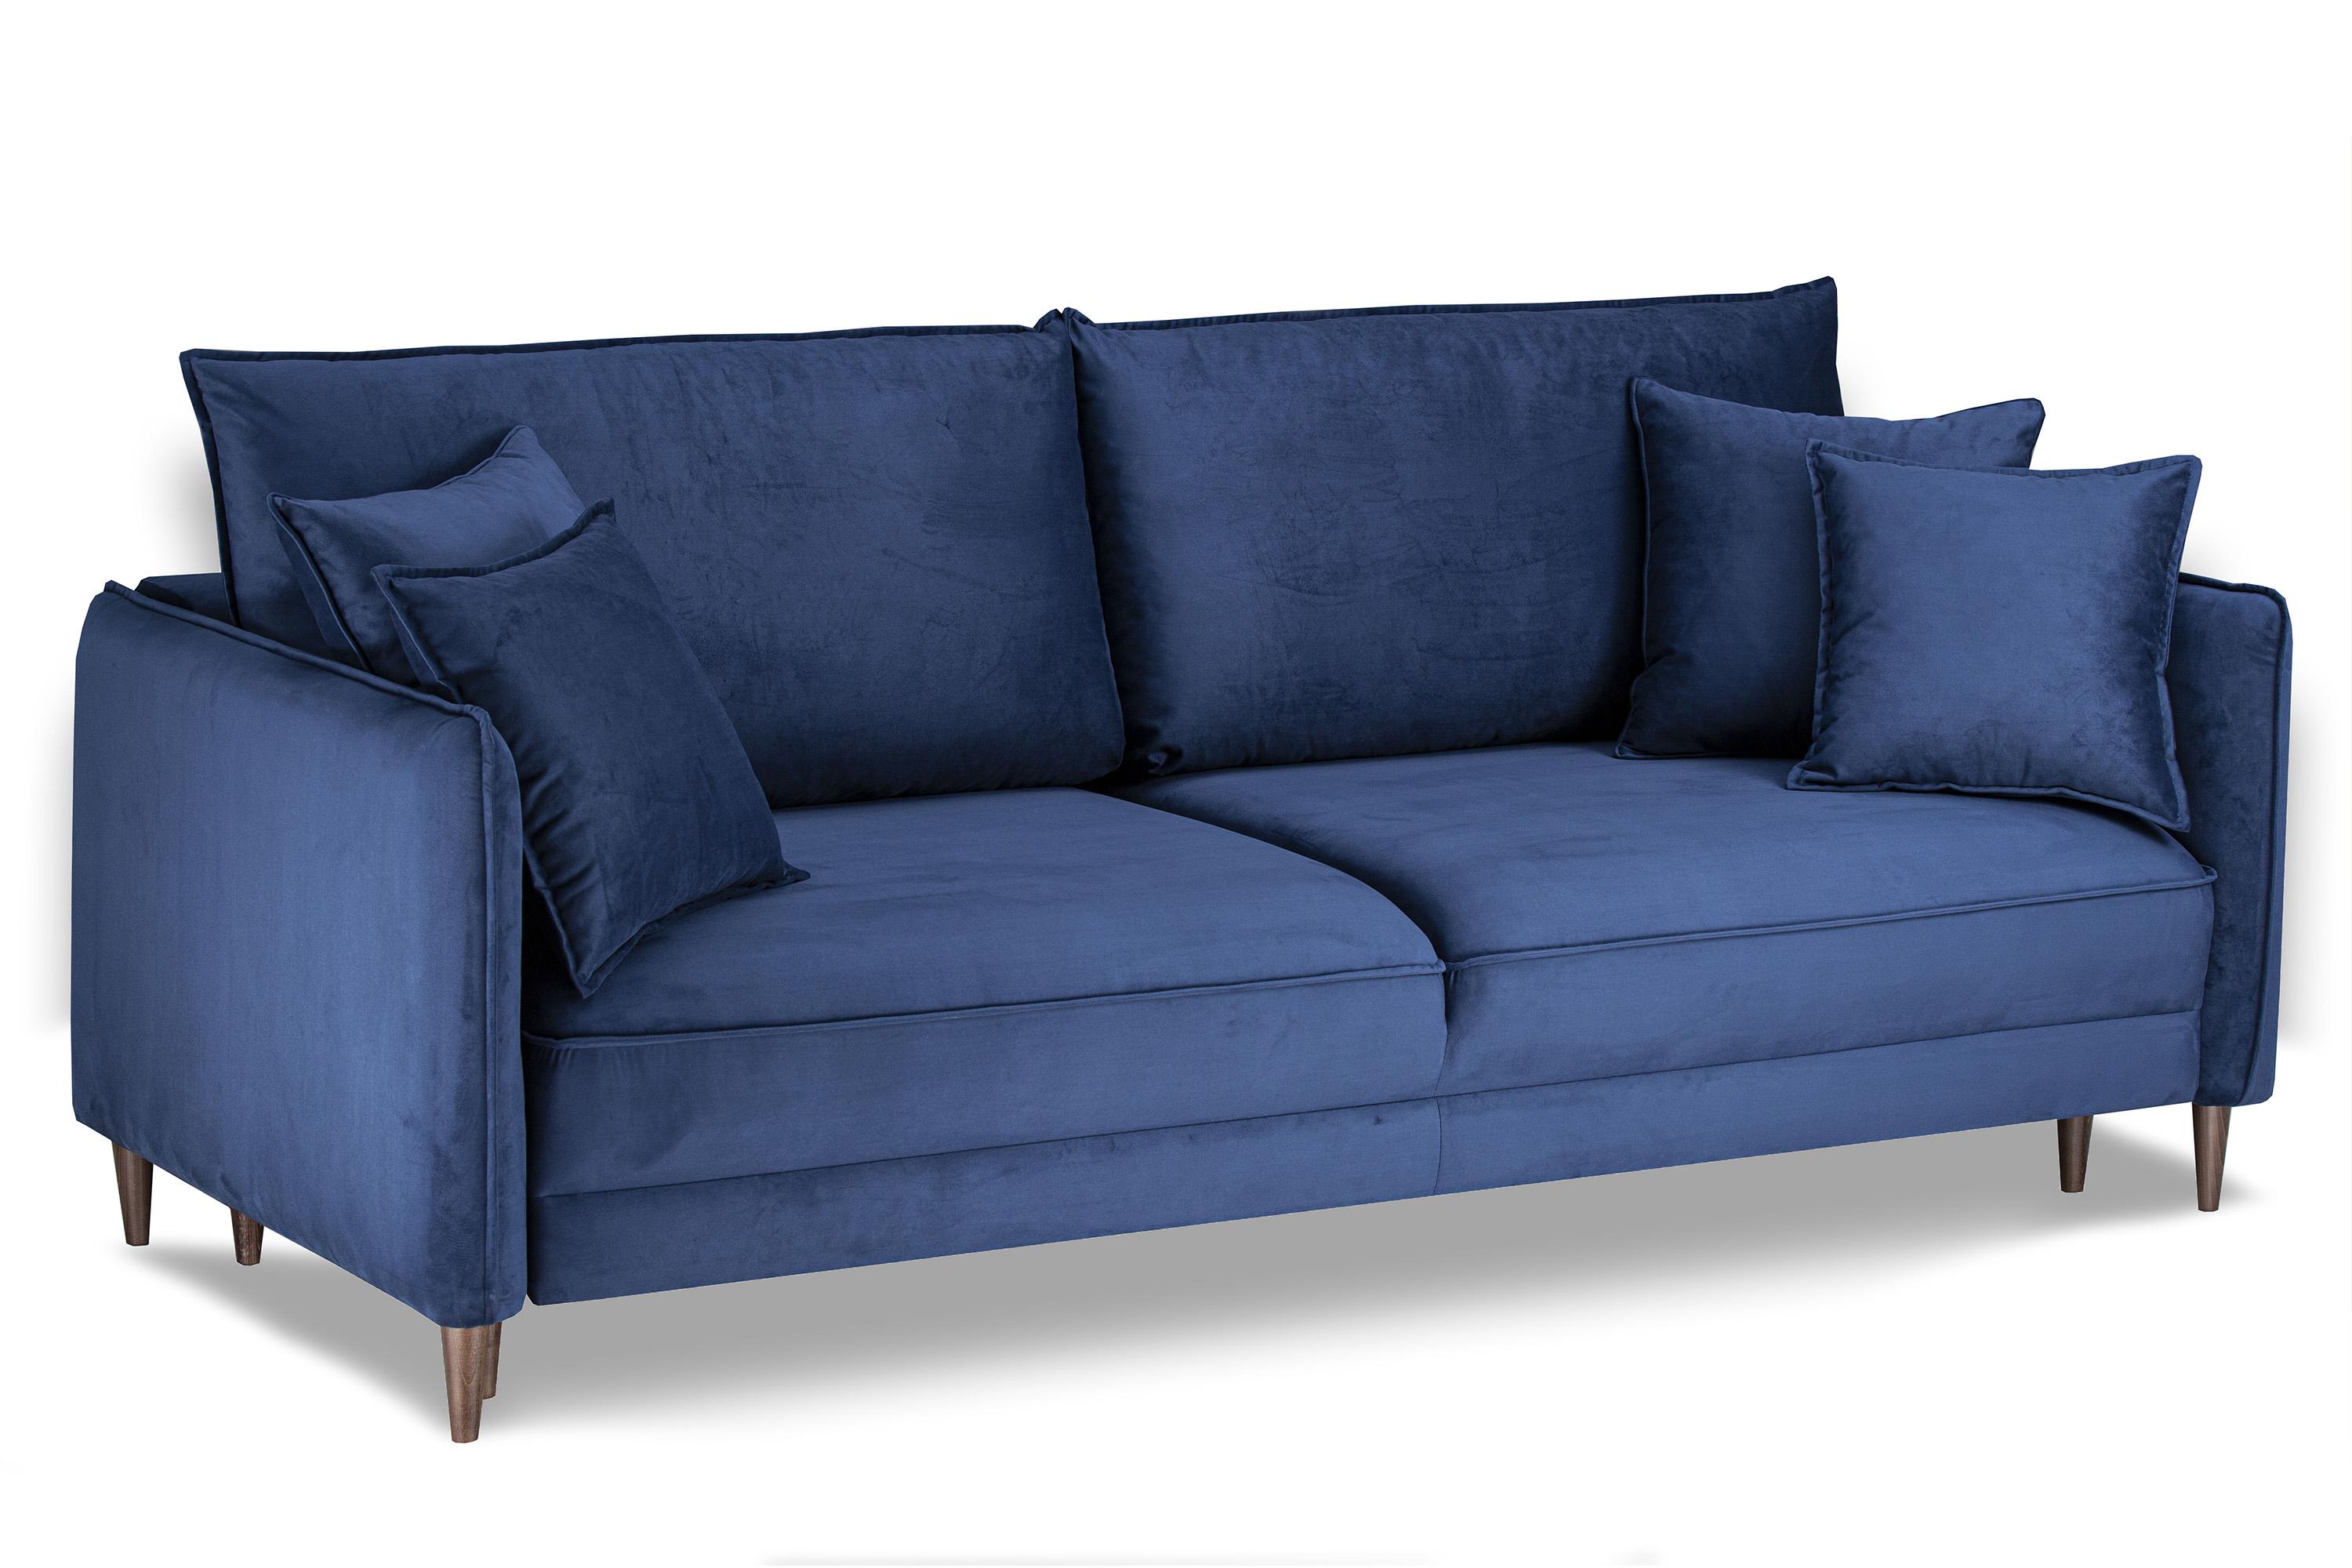 Фото №2 Йорк Премиум диван-кровать велюр Велутто цвет 26